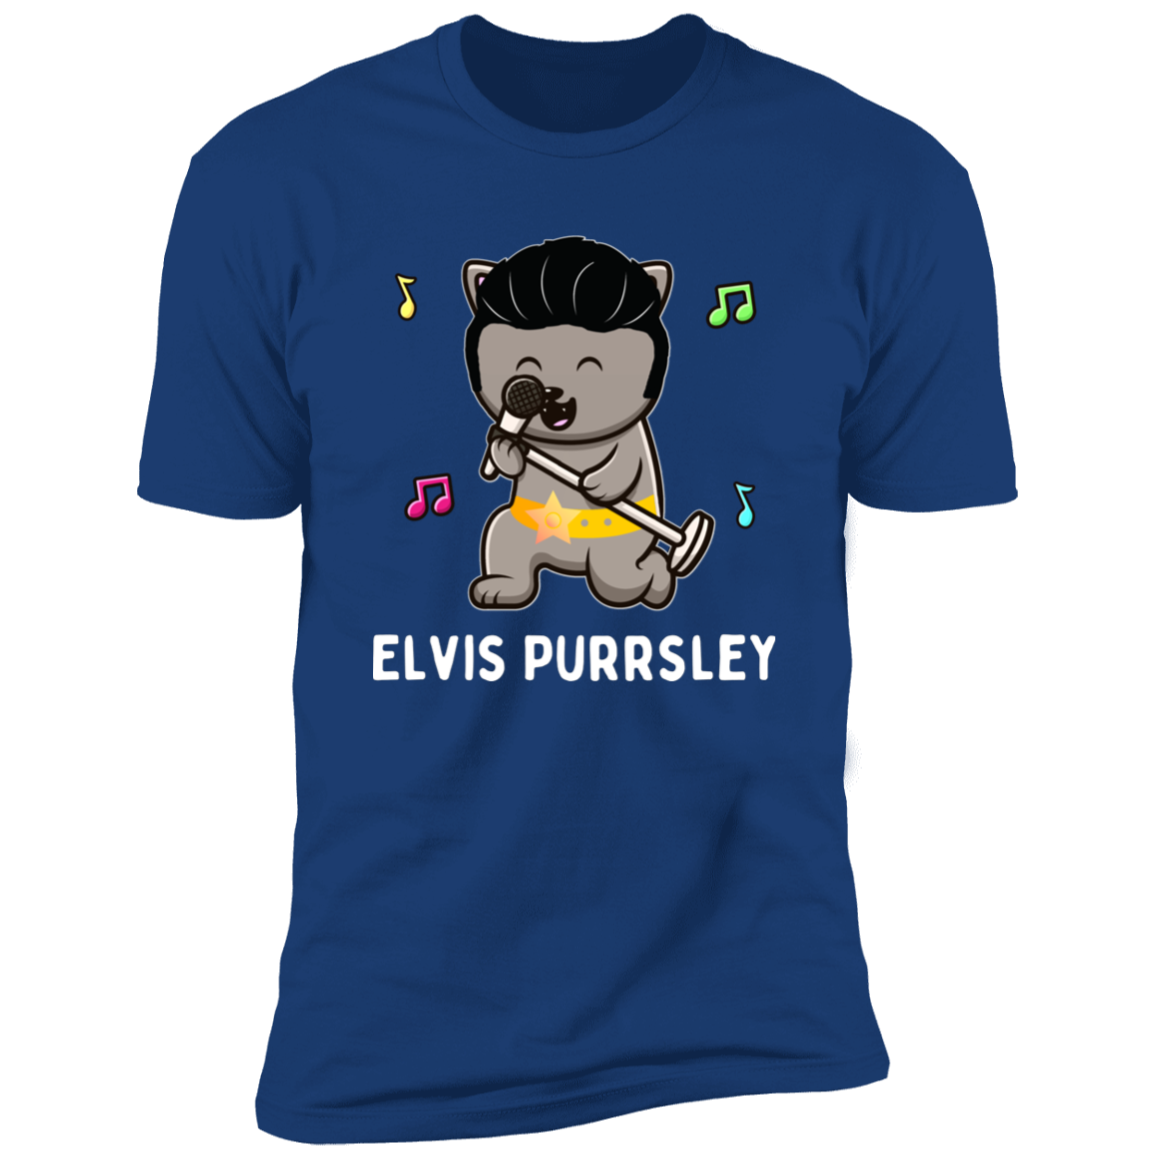 Elvis Purrsley cat Shirt, Funny cat shirt for humans, cat mom shirt, cat dad shirt, in royal blue